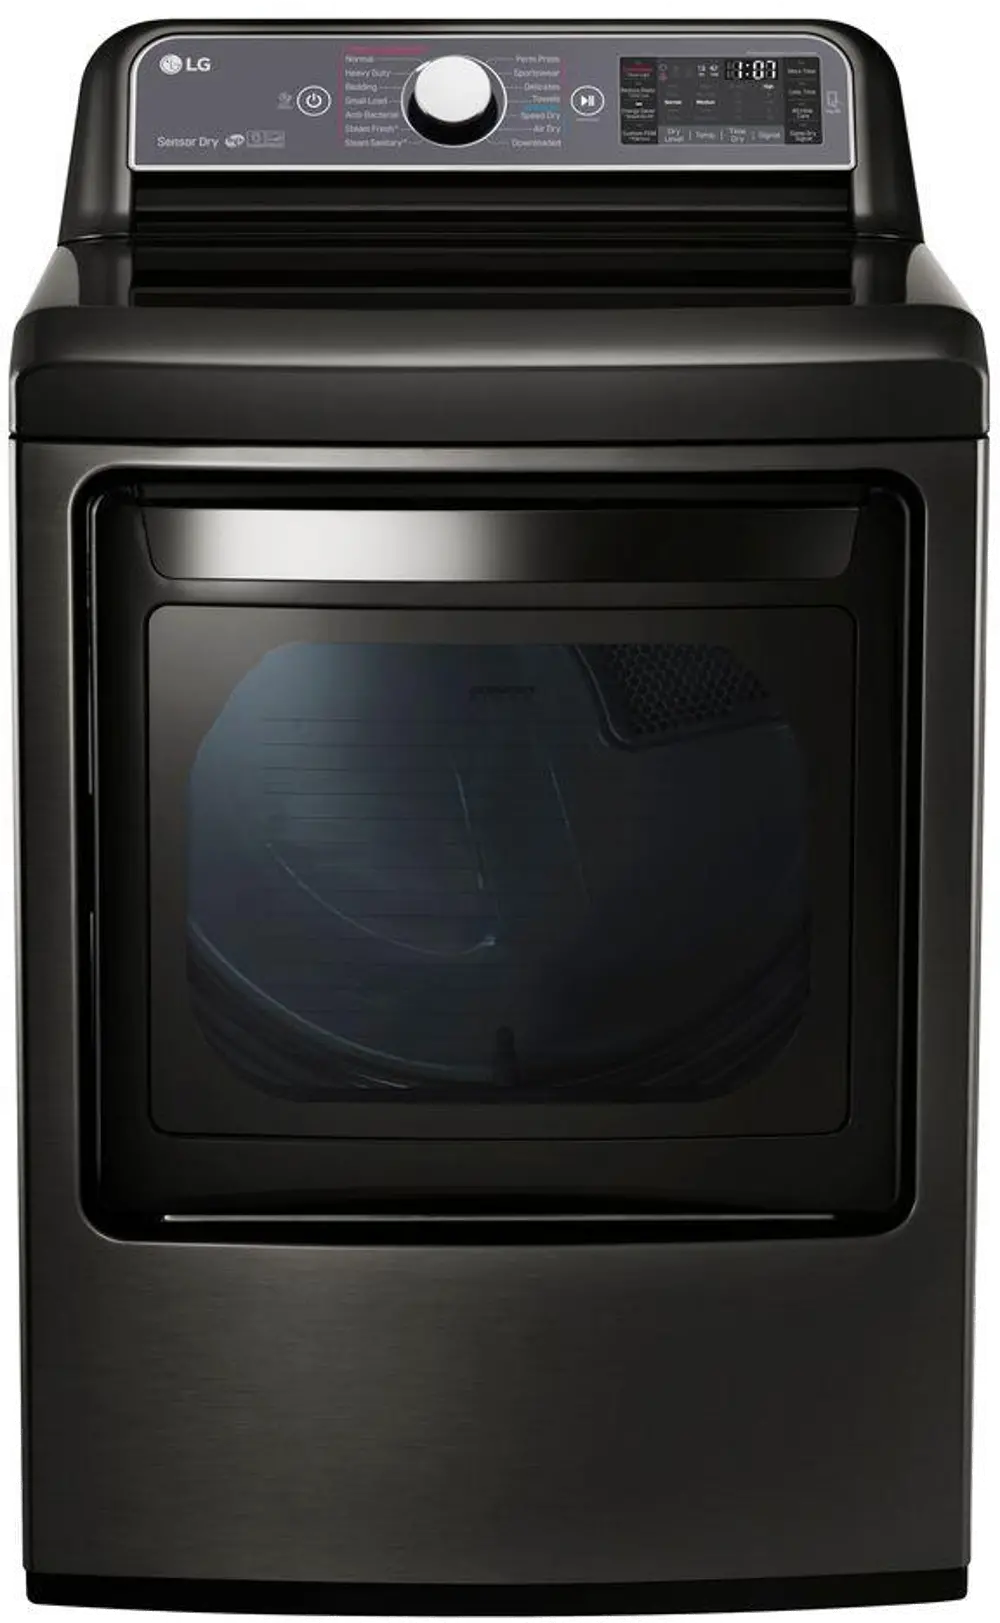 DLEX7600KE LG Electric Dryer with EasyLoad - 7.3 cu. ft. Black Stainless Steel-1